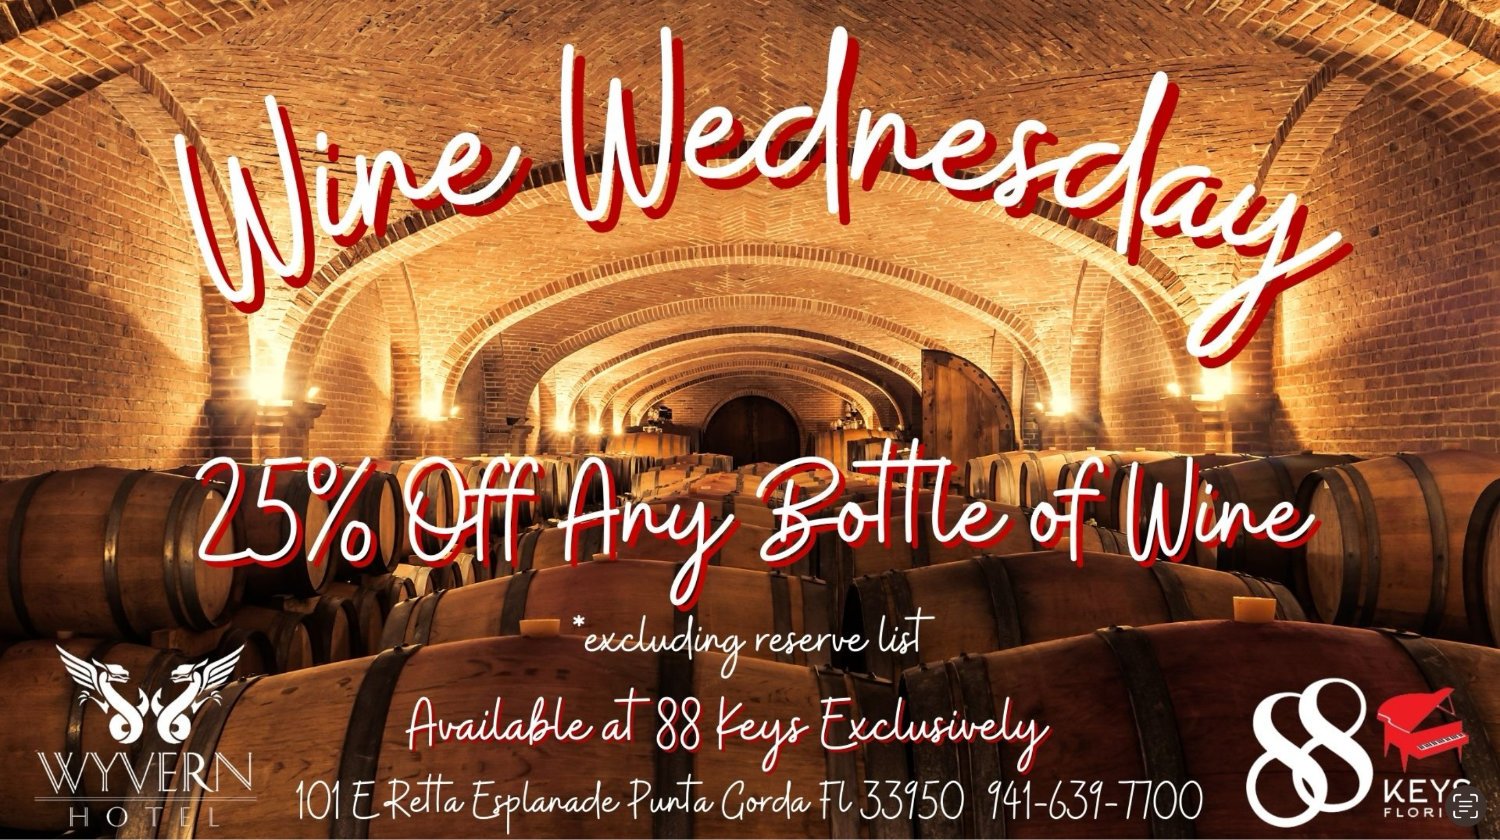 Wine Wednesday at 88 Keys